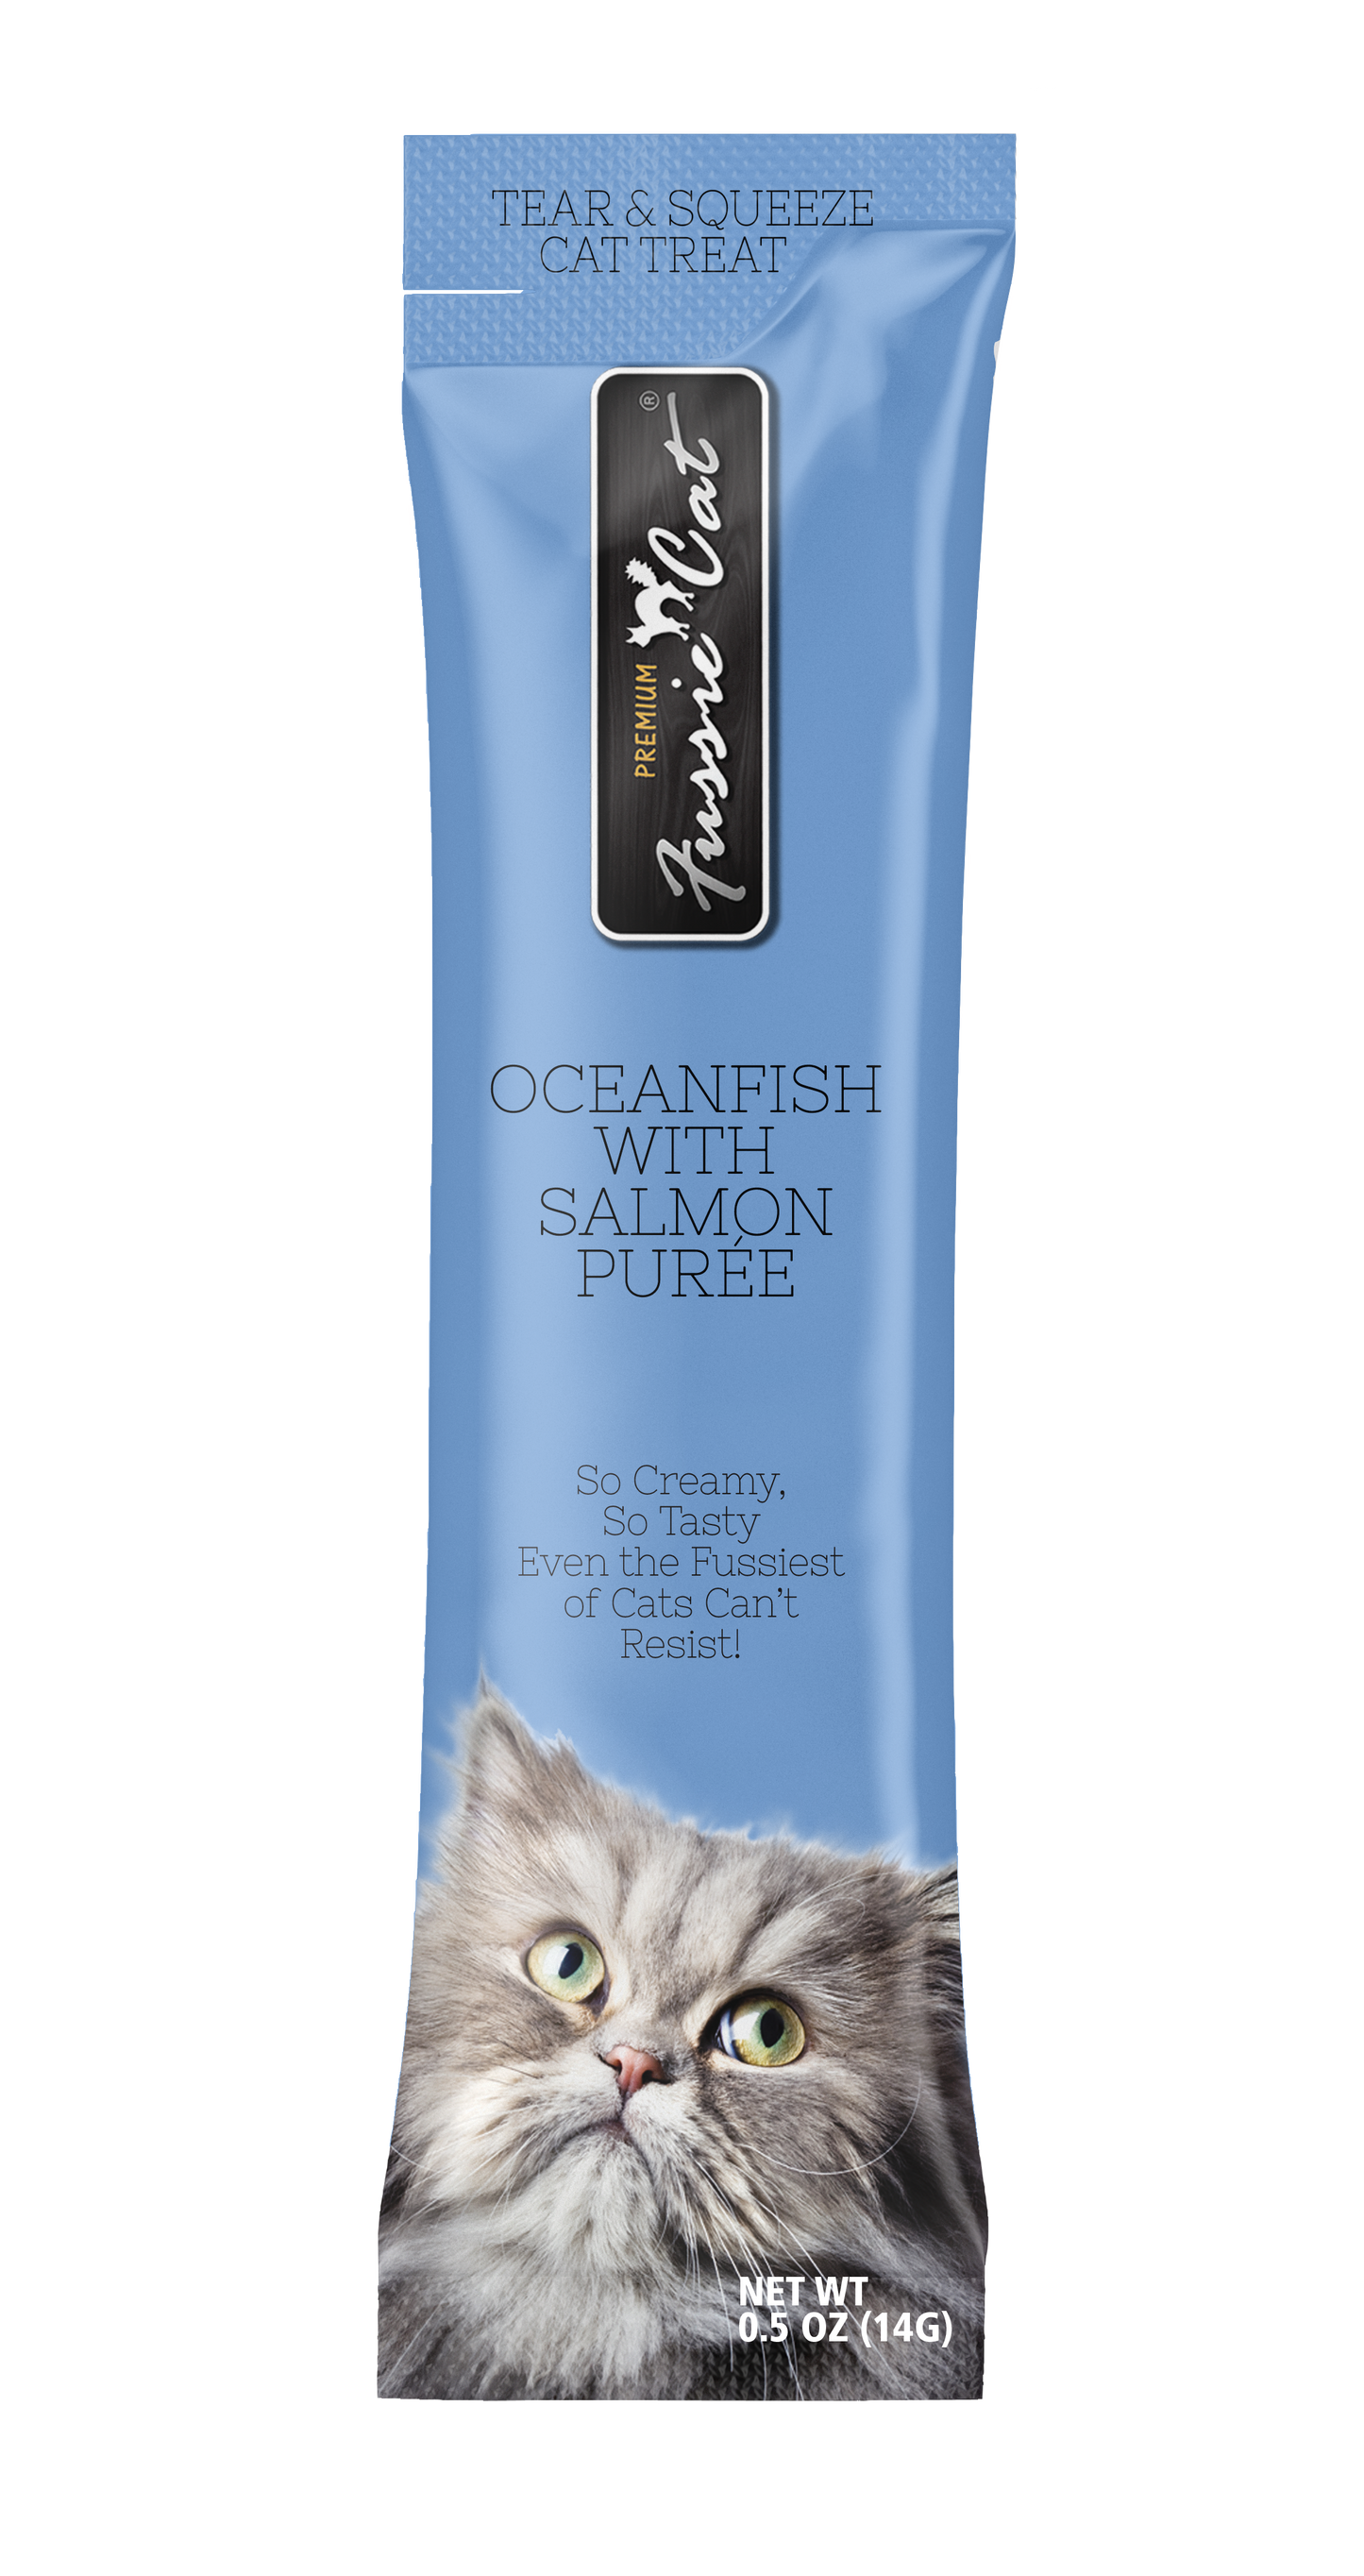 Fussie Cat Oceanfish With Salmon Purée 0.5-oz, 4-Pack, Cat Treat